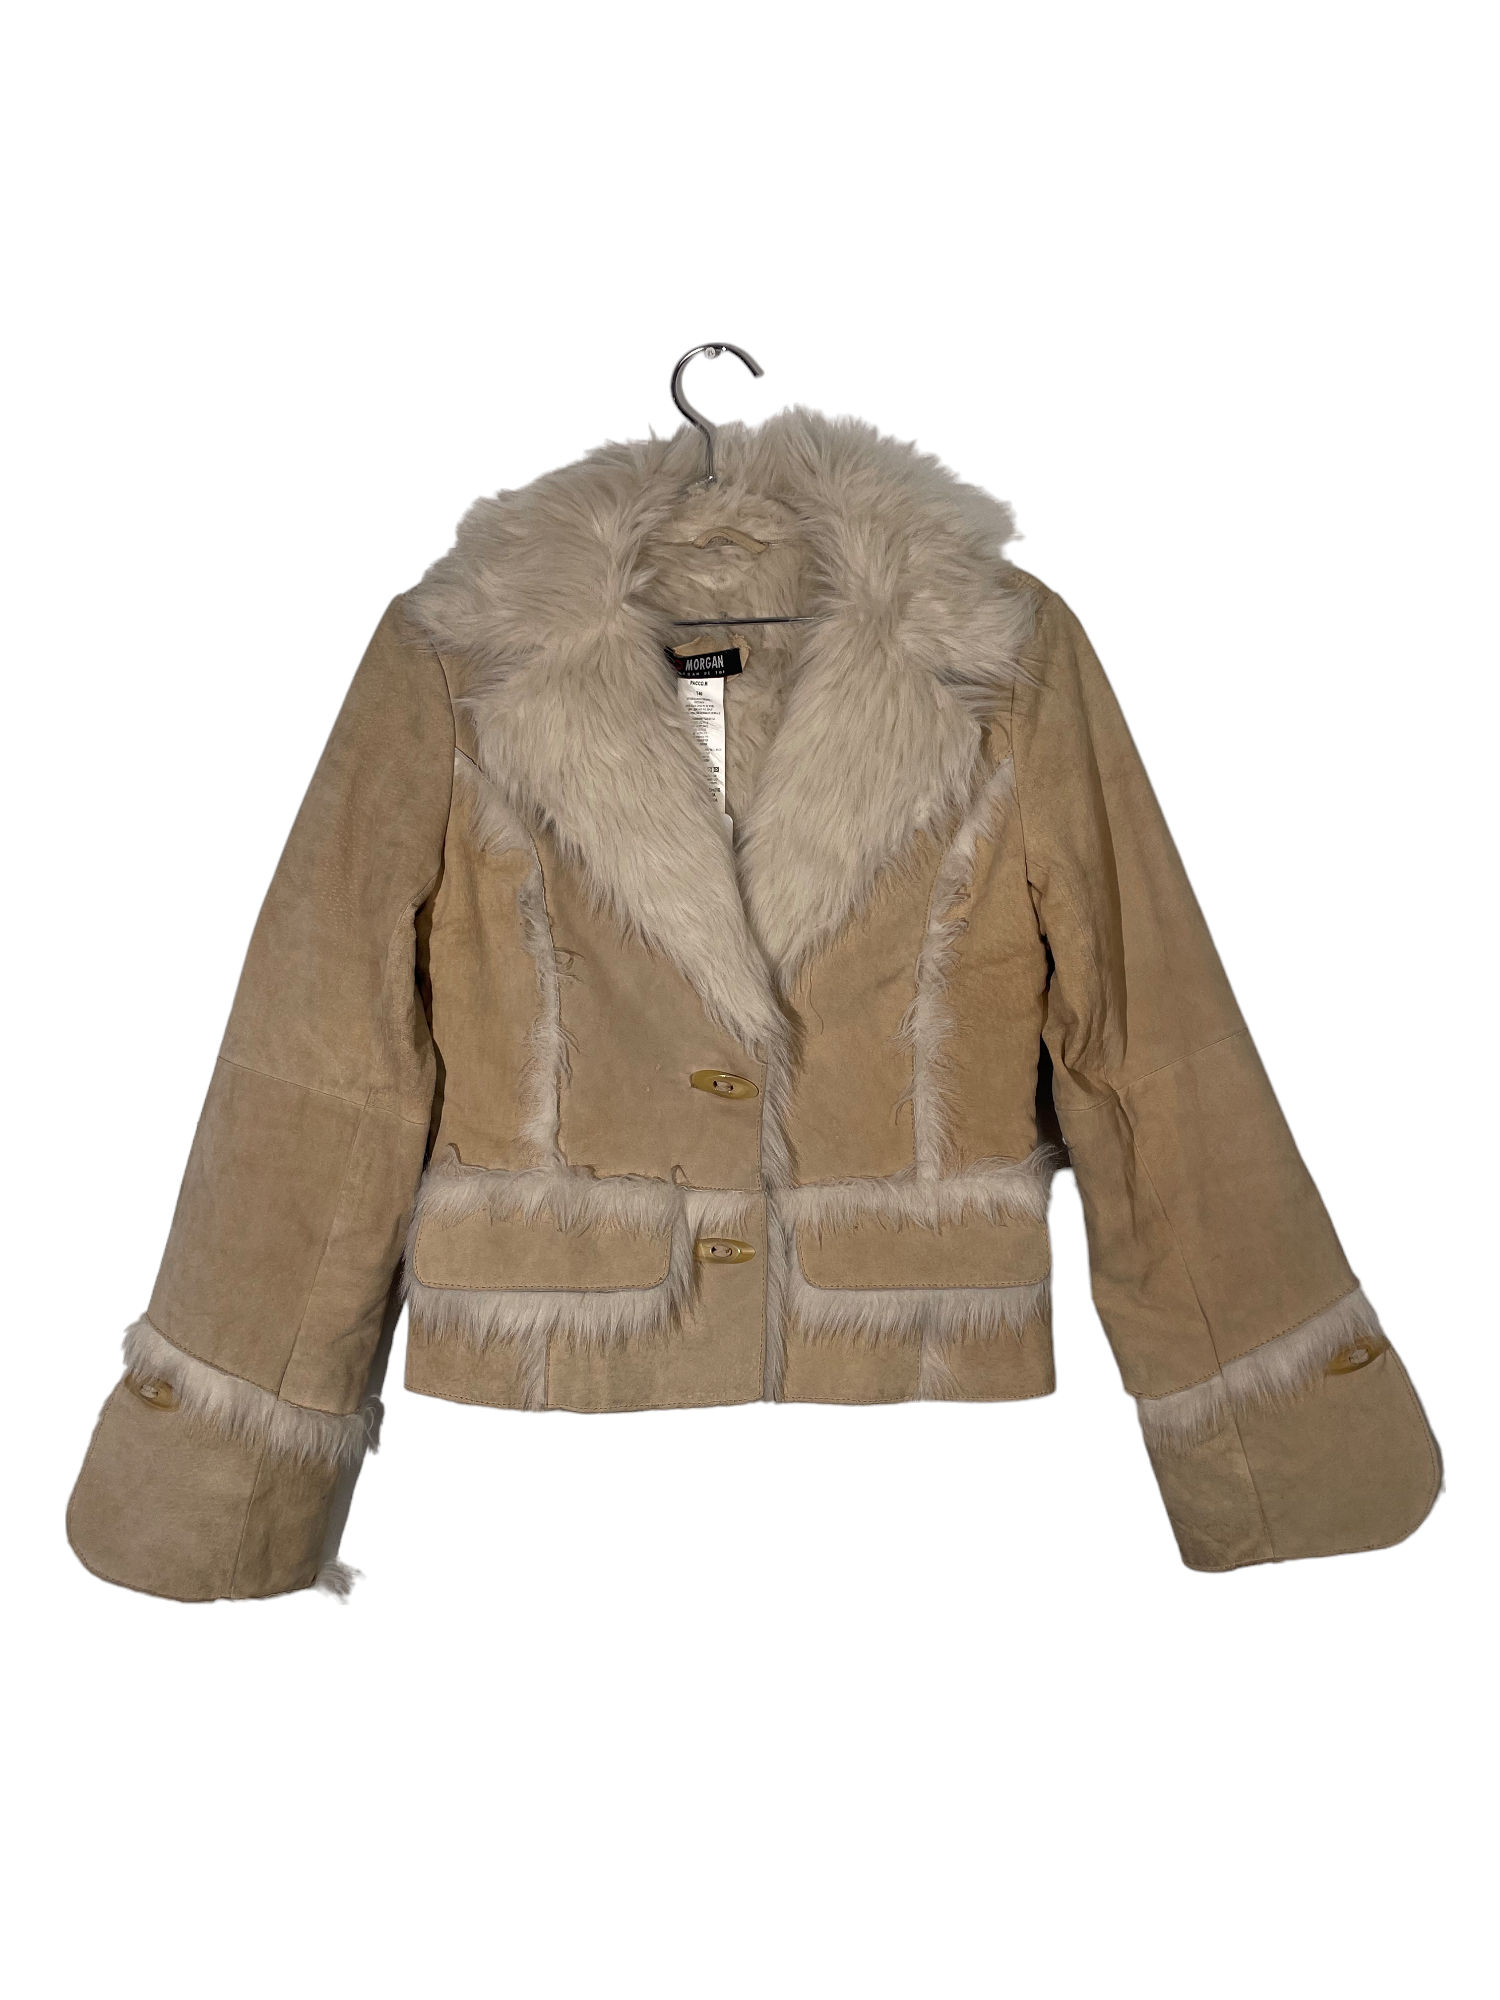 90's Leather & Faux Fur Jacket